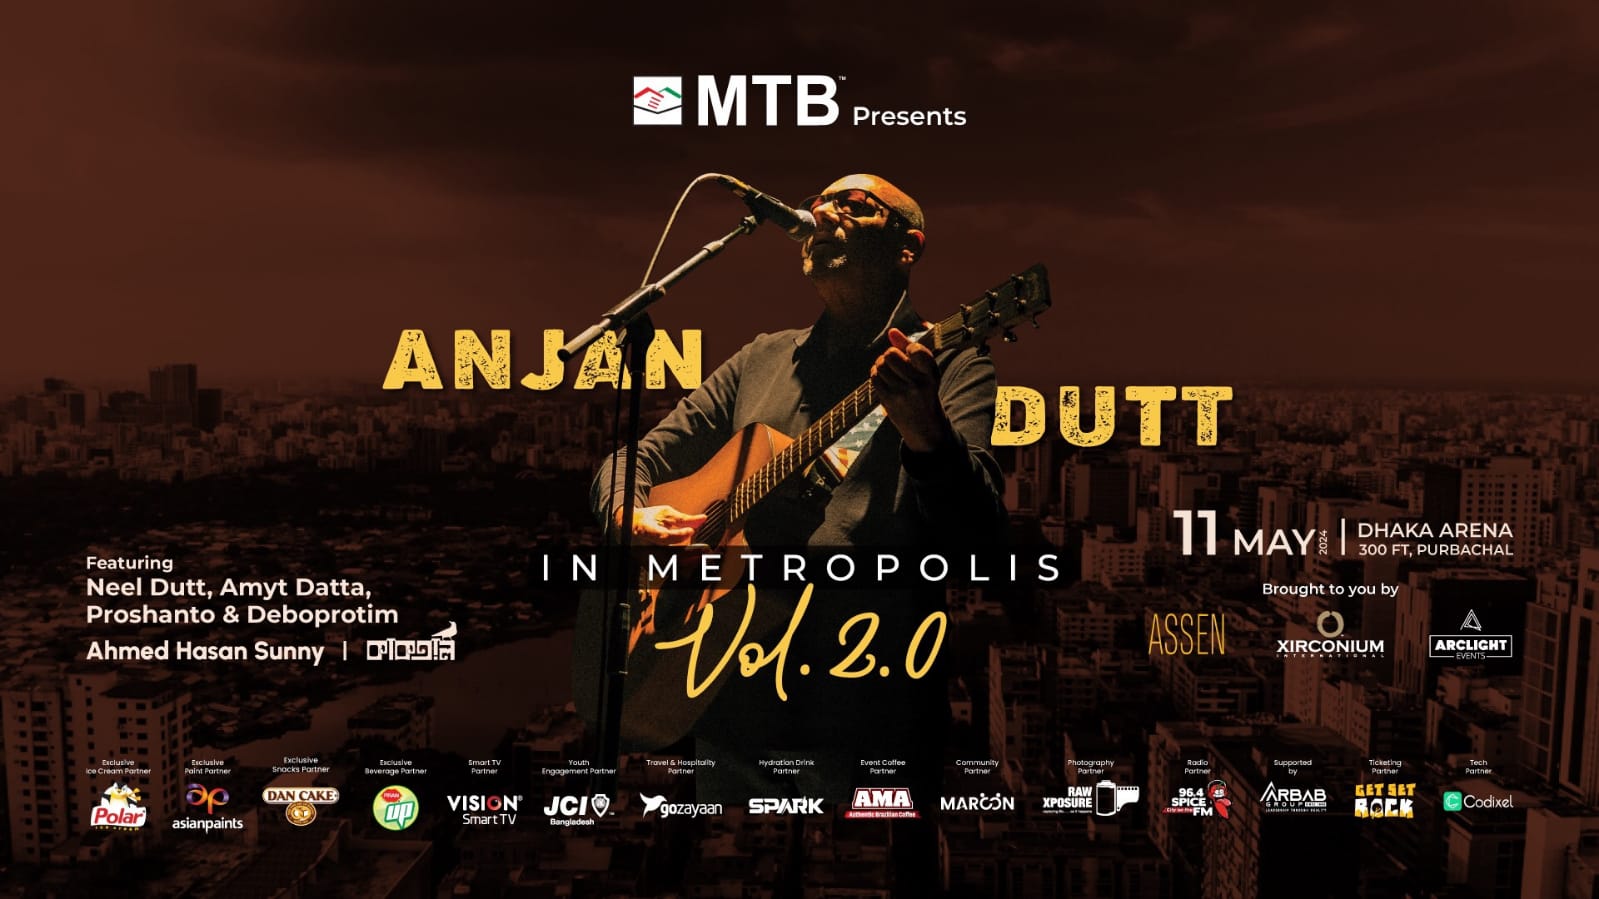 Anjan Dutt set to enthrall fans in Dhaka with Metropolis Volume-2.0